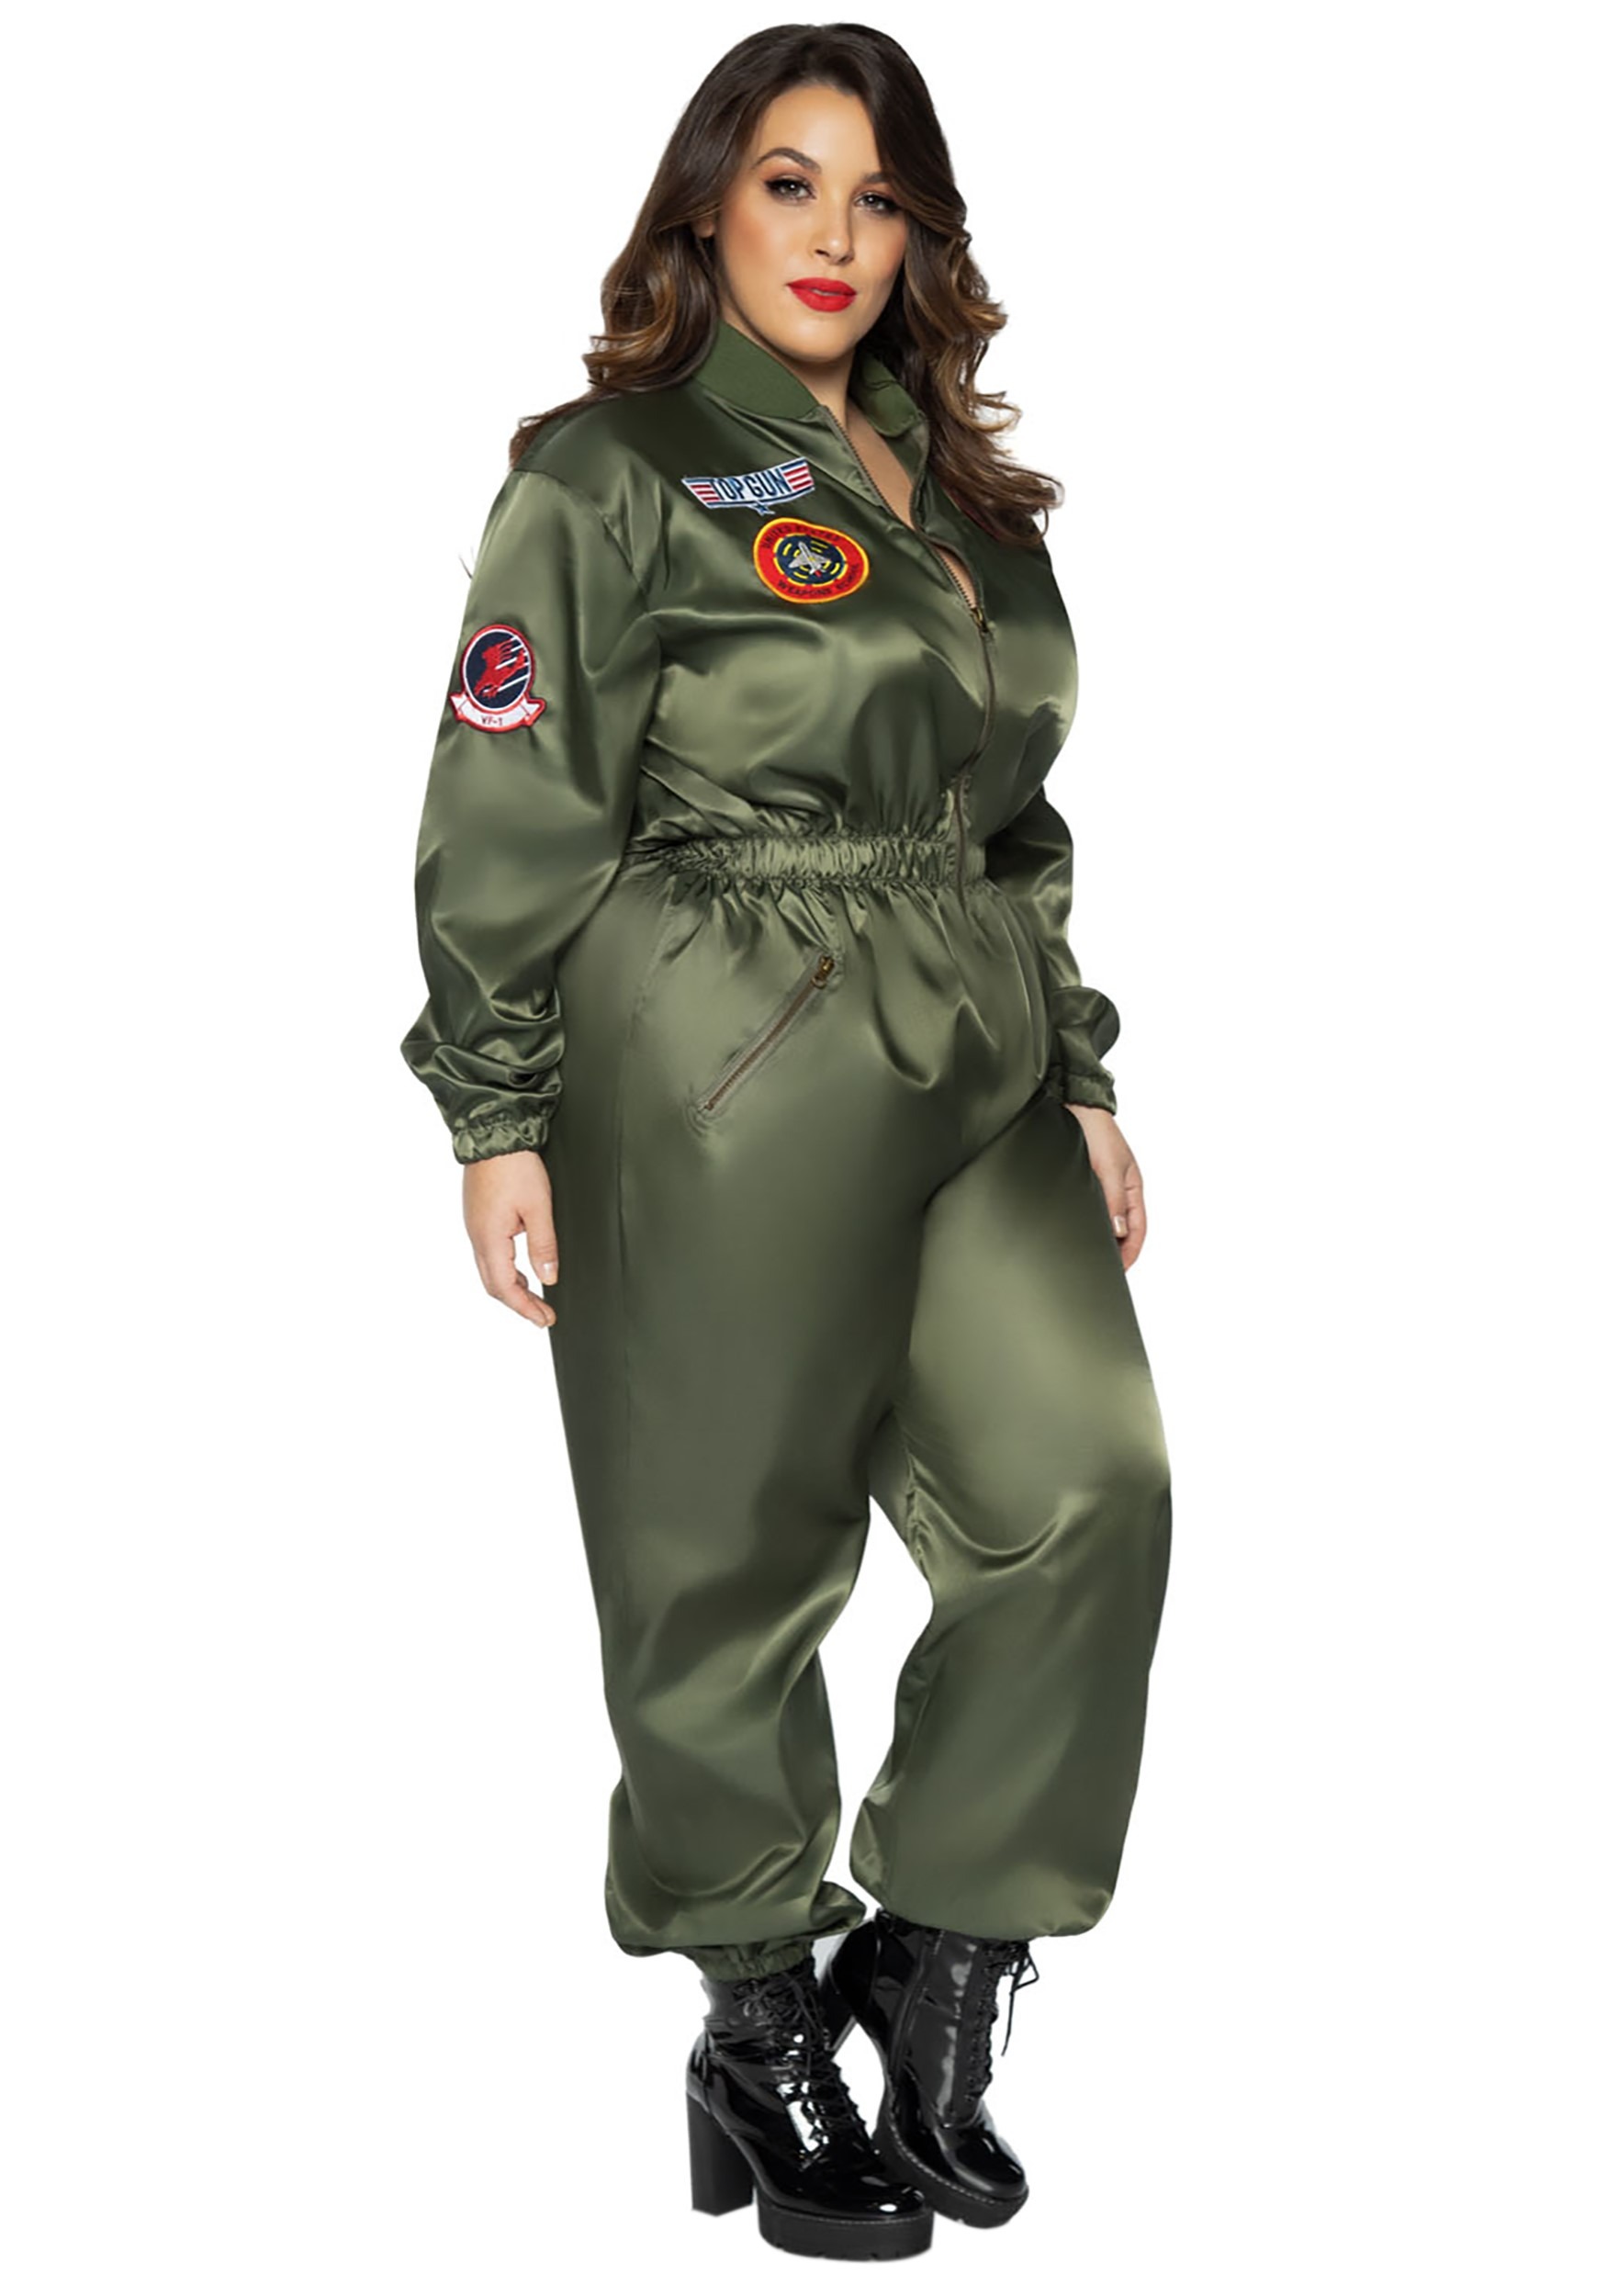 https://images.halloweencostumes.ca/products/65381/1-1/top-gun-womens-plus-size-flight-suit-costume.jpg